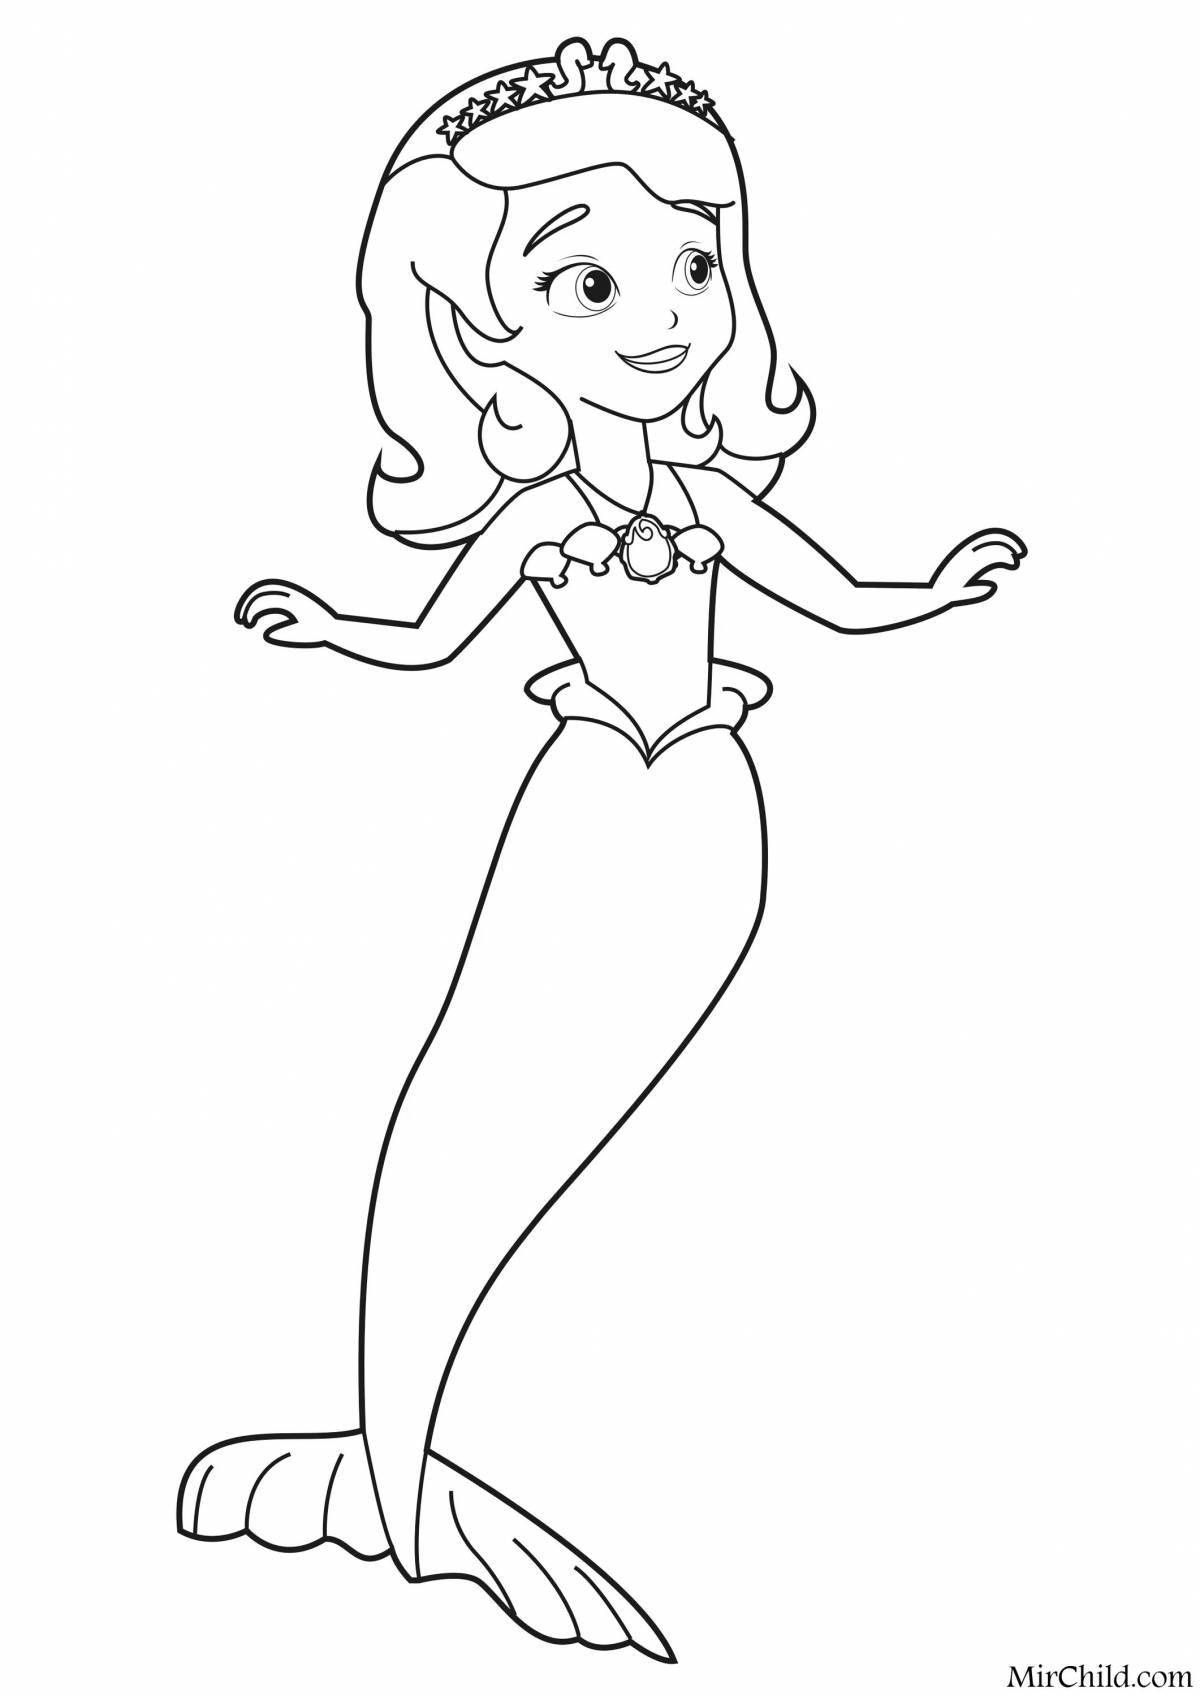 Fancy coloring princess sophia the little mermaid